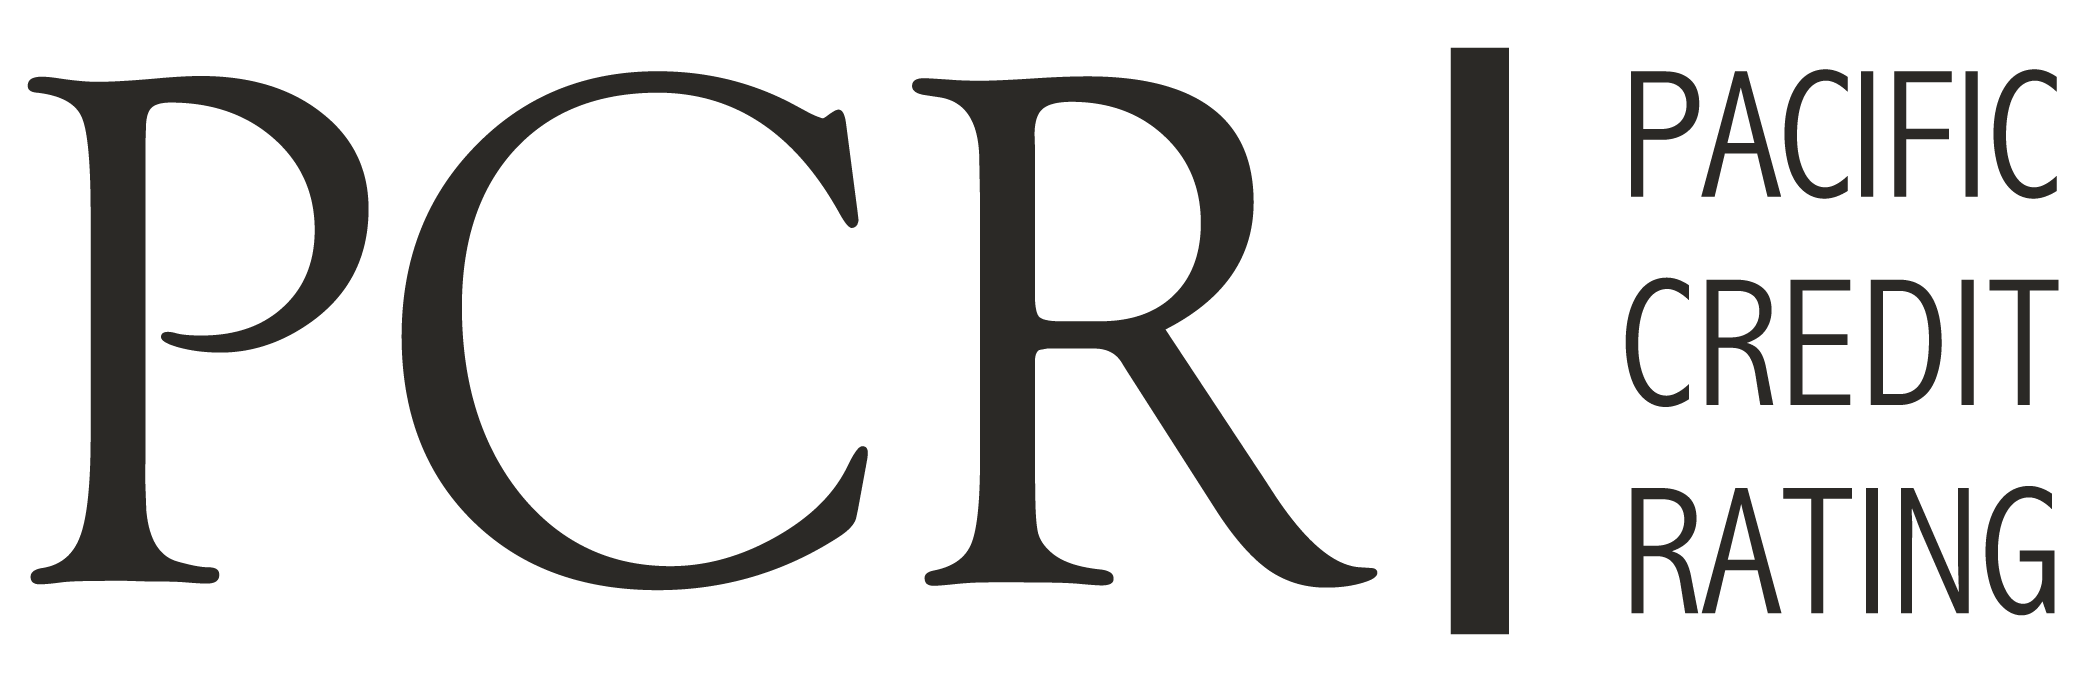 Pacific Credit Rating Logo